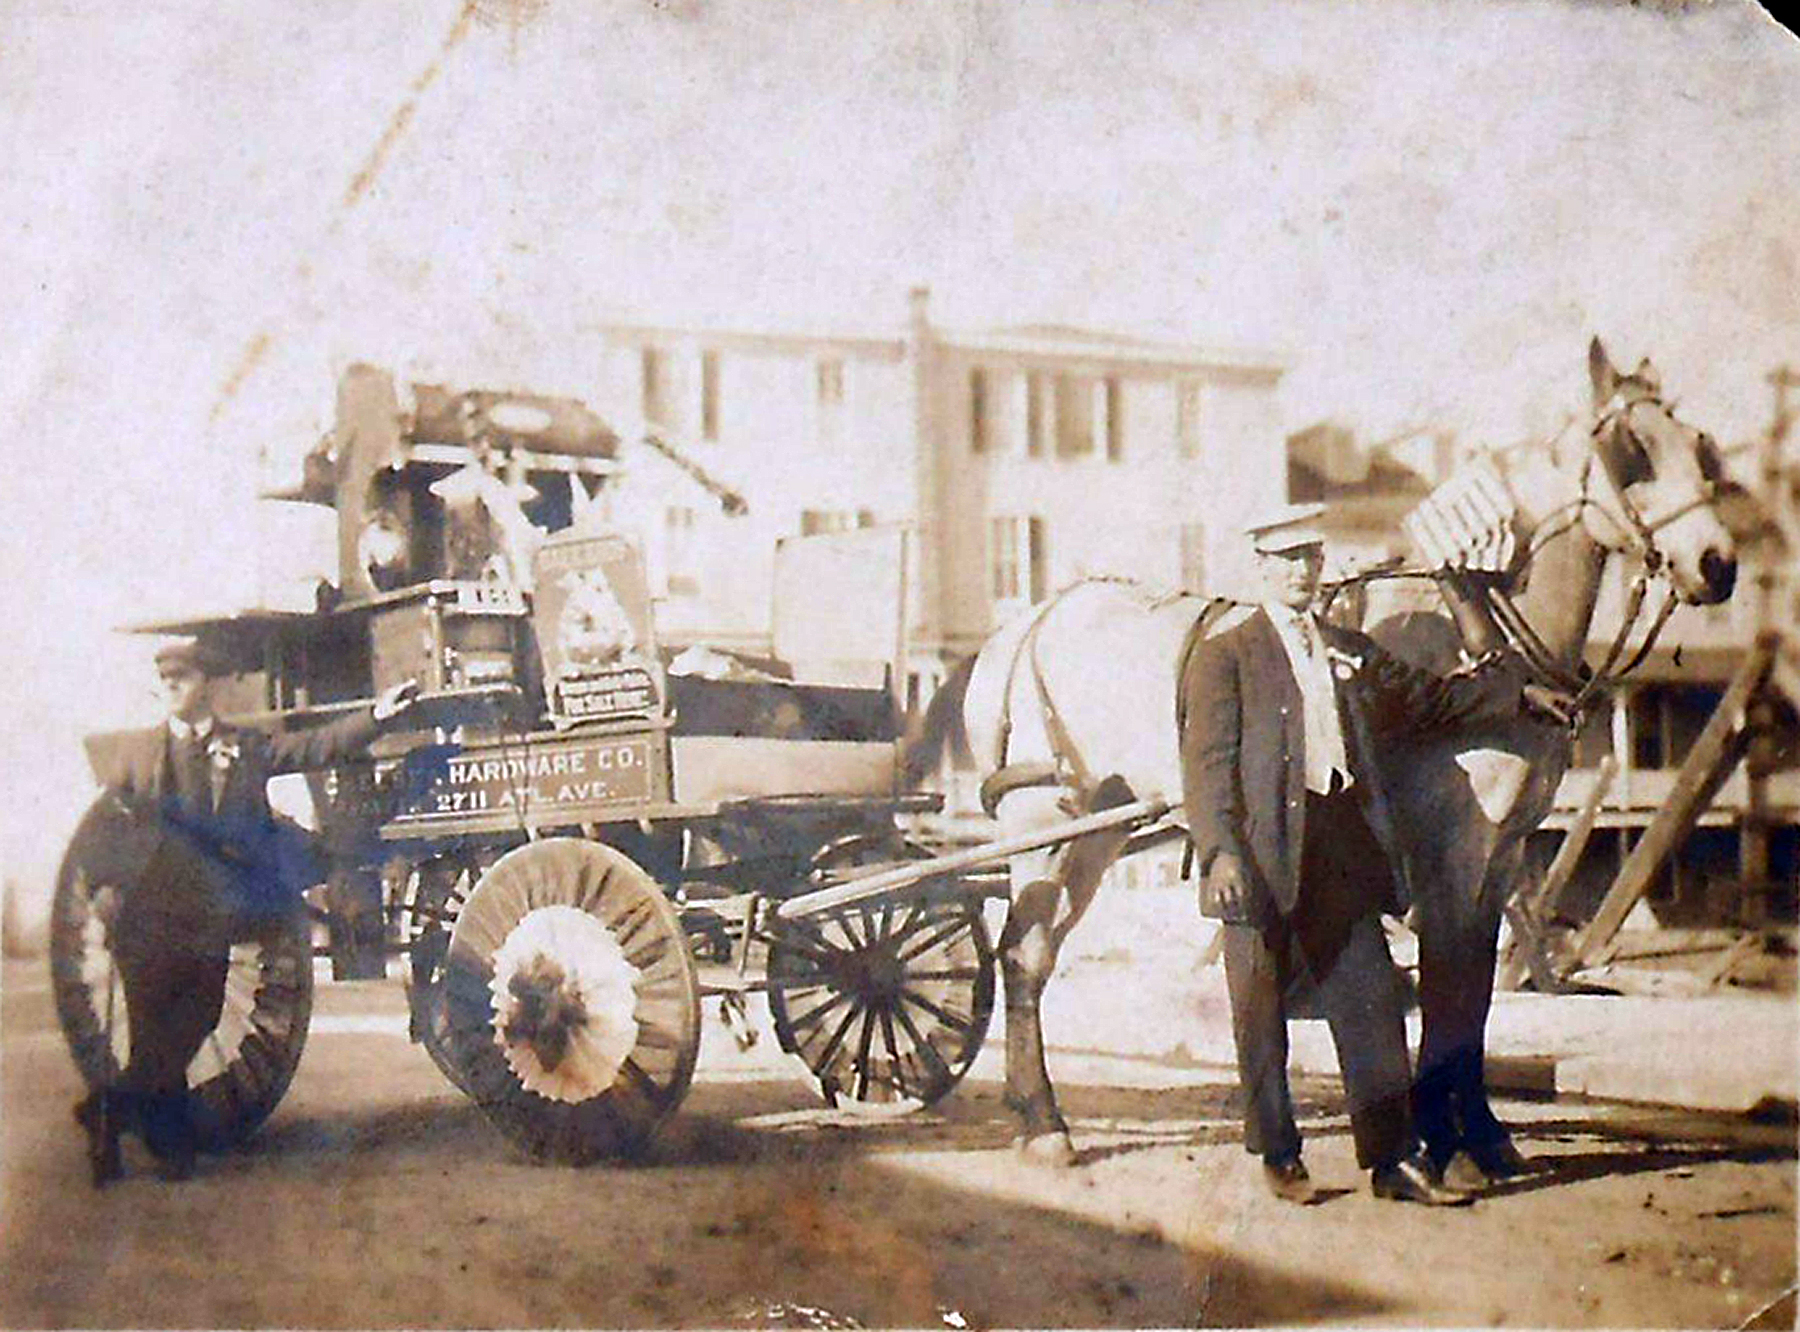 Atlantic City - Decorated wagon for Chelsea Hardware Company - 1907